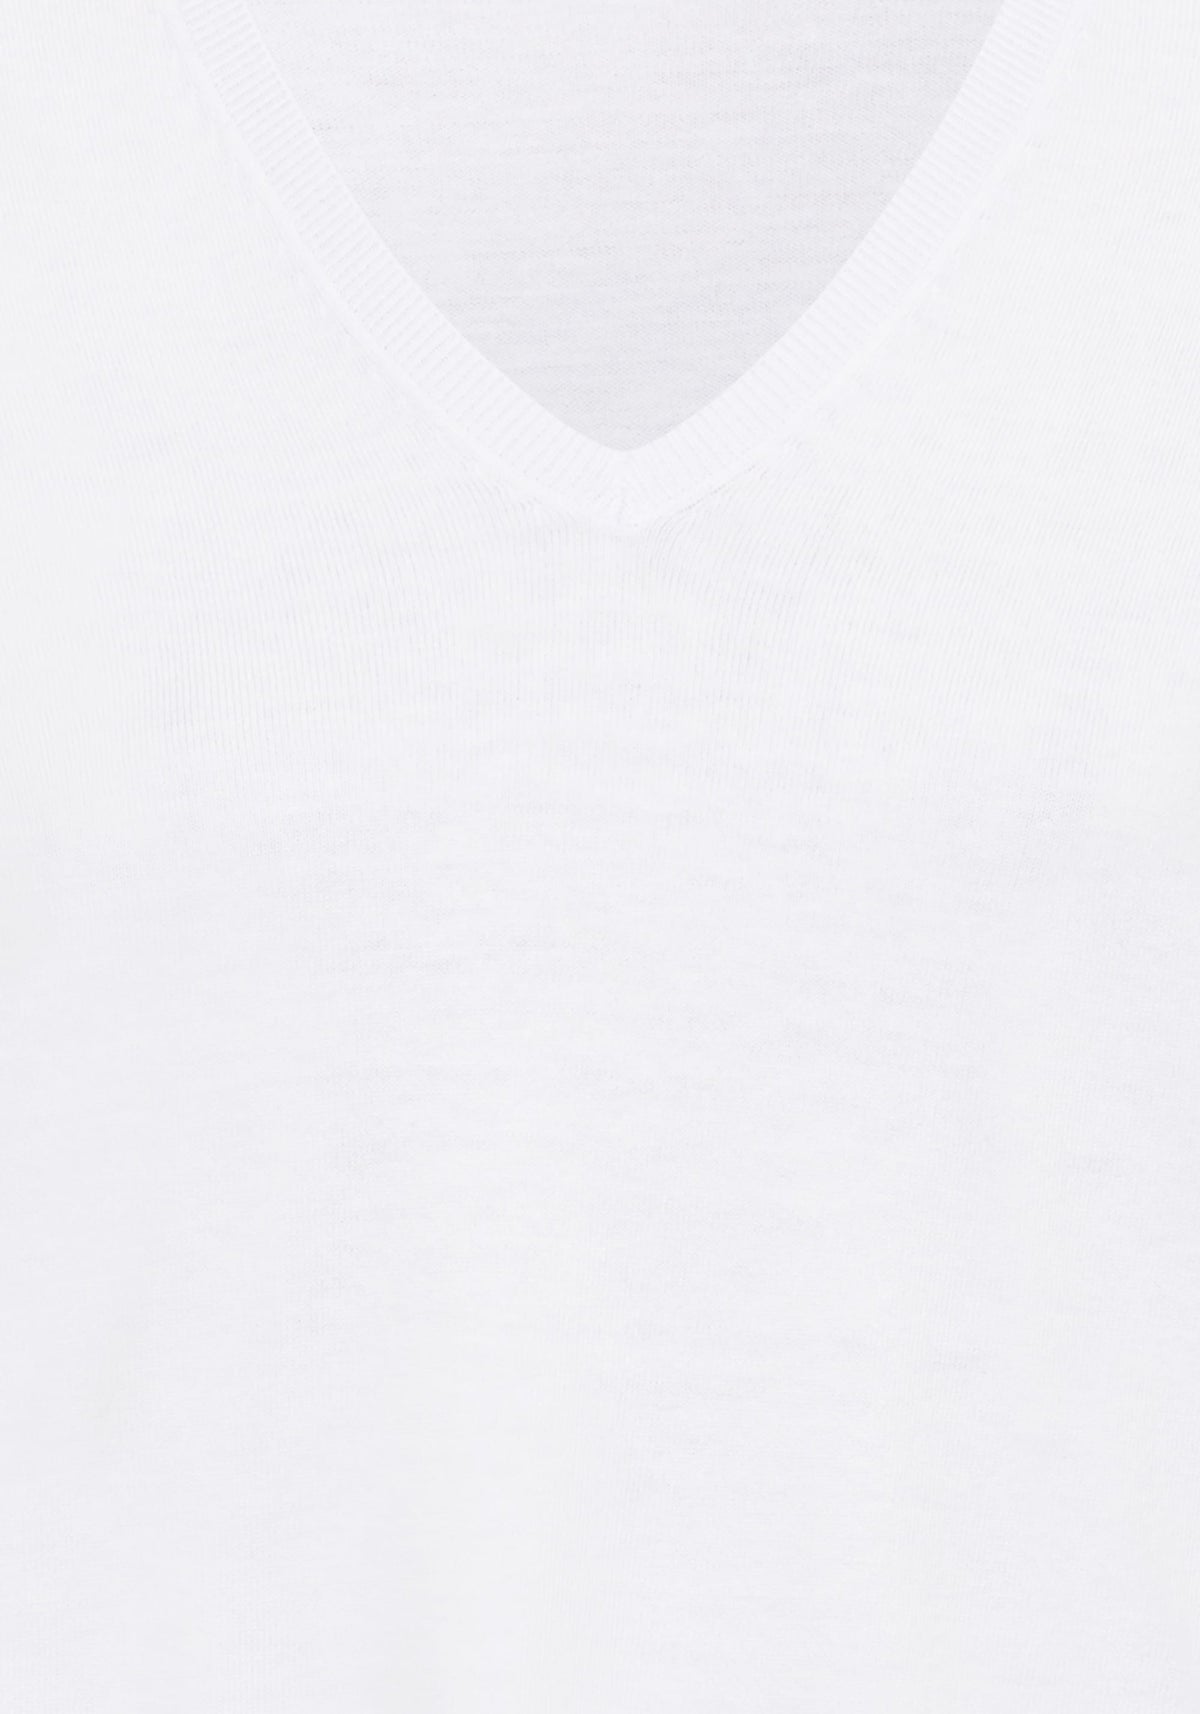 3/4 Sleeve Basic V-Neck T-Shirt